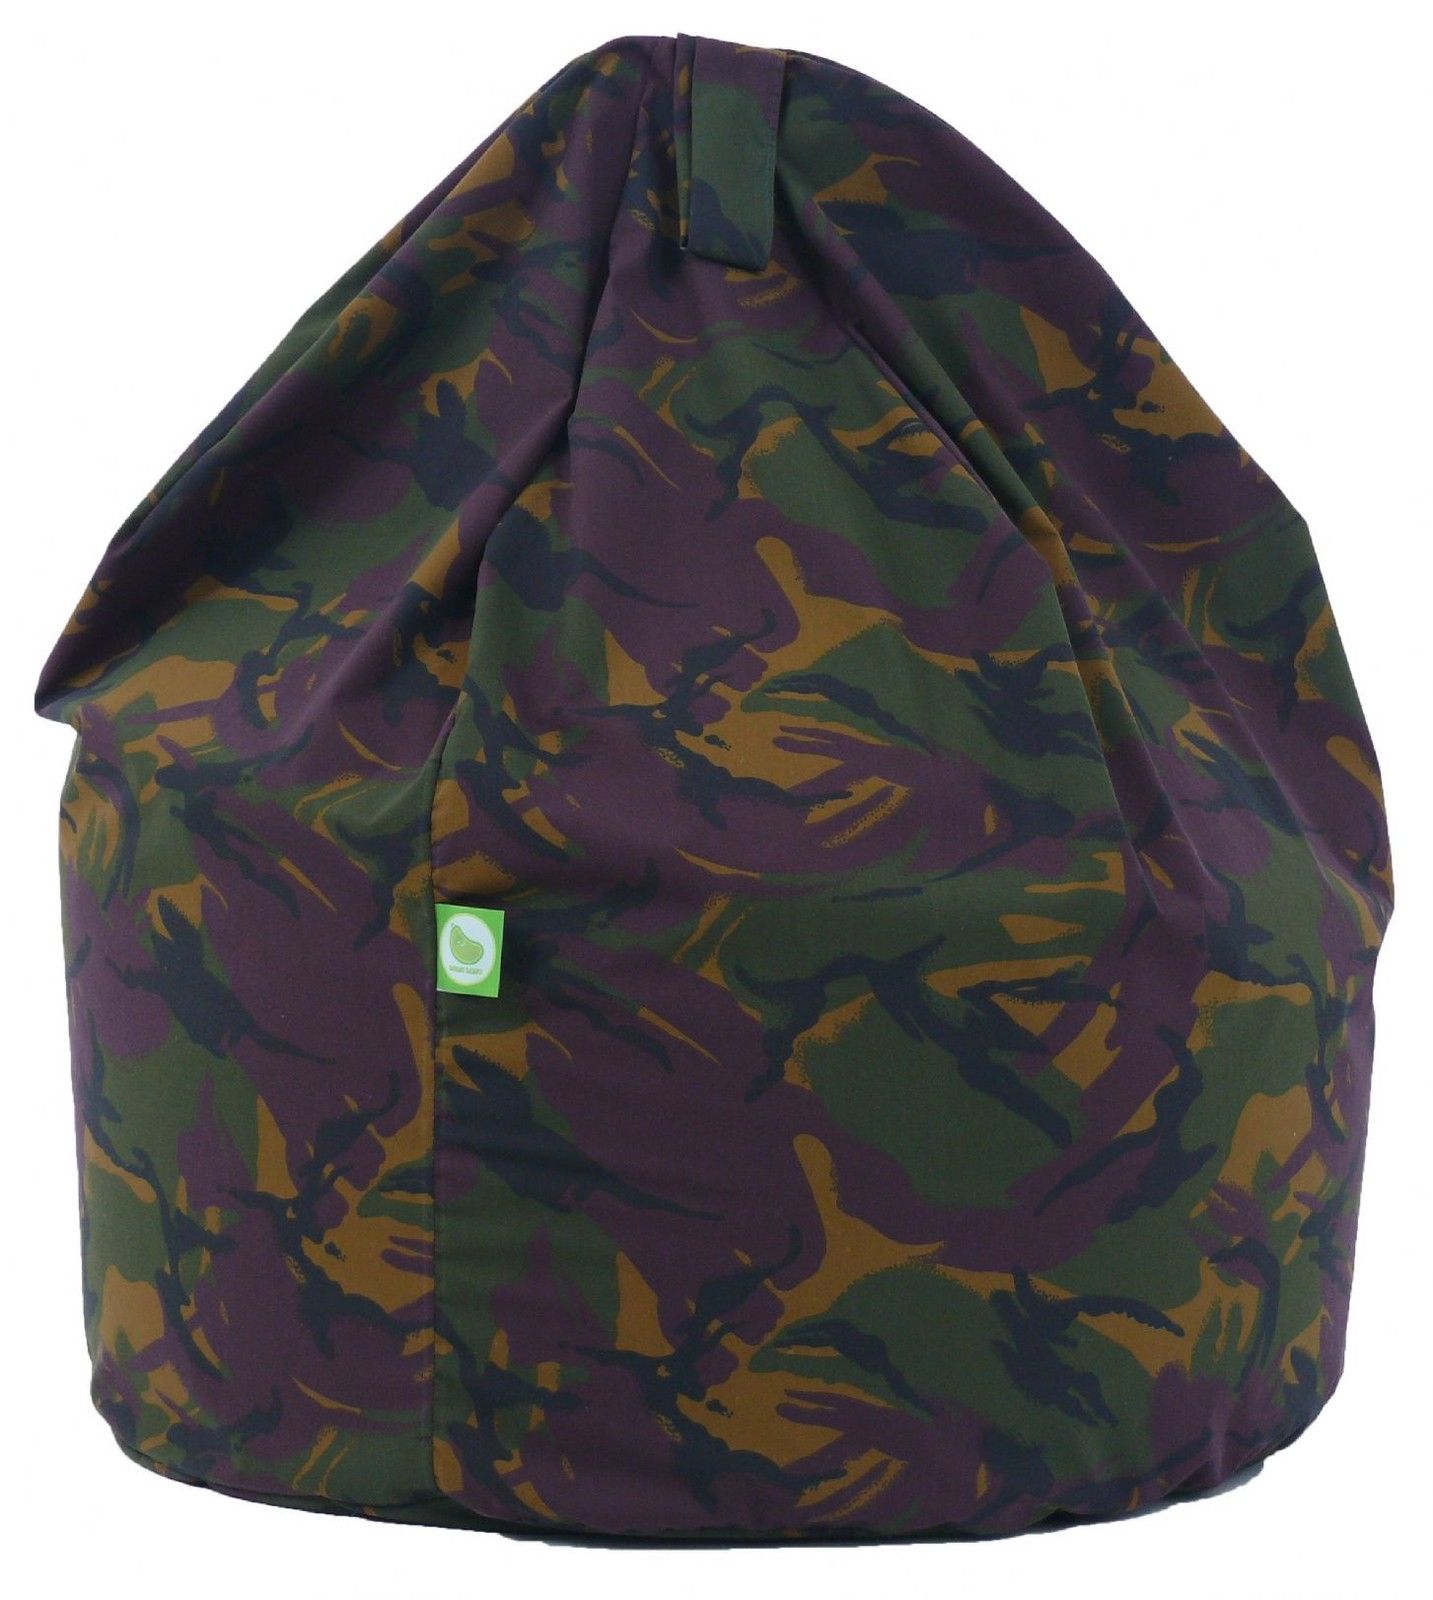 Cotton Green Army Camo Bean Bag Large Size